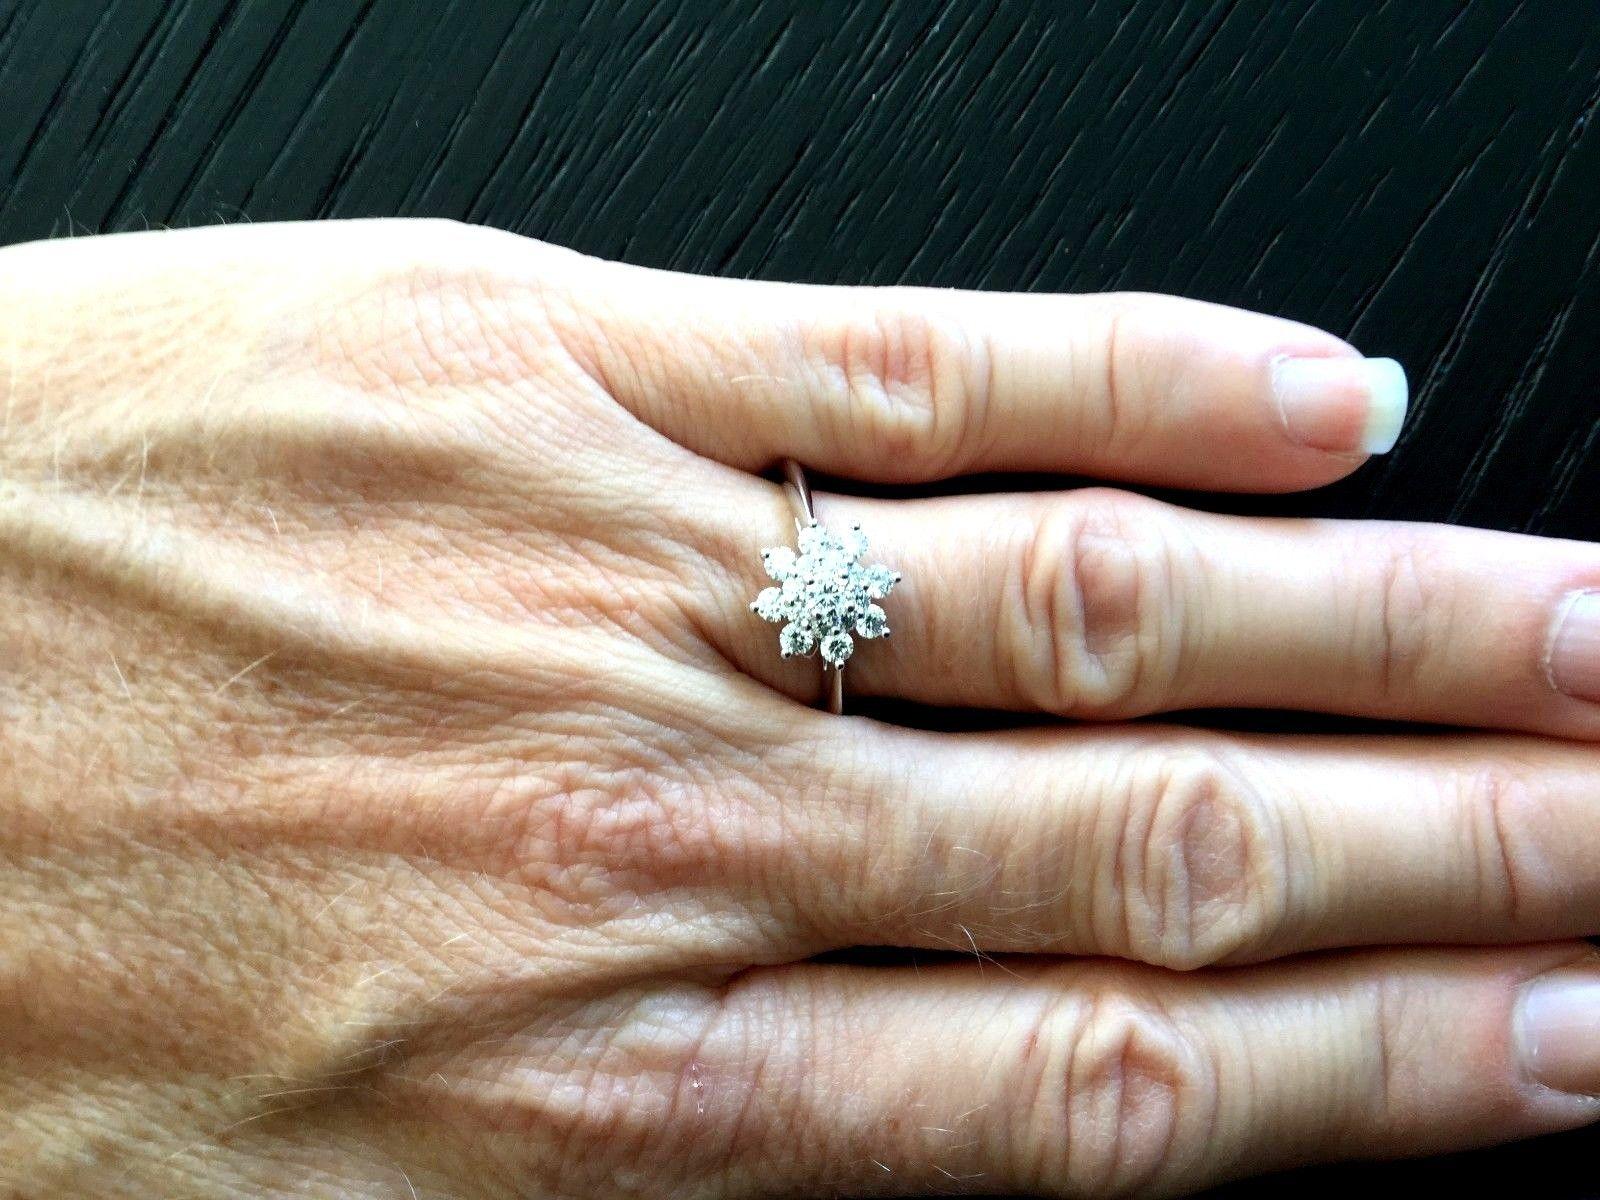 Round Cut Tiffany & Co. Platinum and Diamond Flower Ring .60 Carat